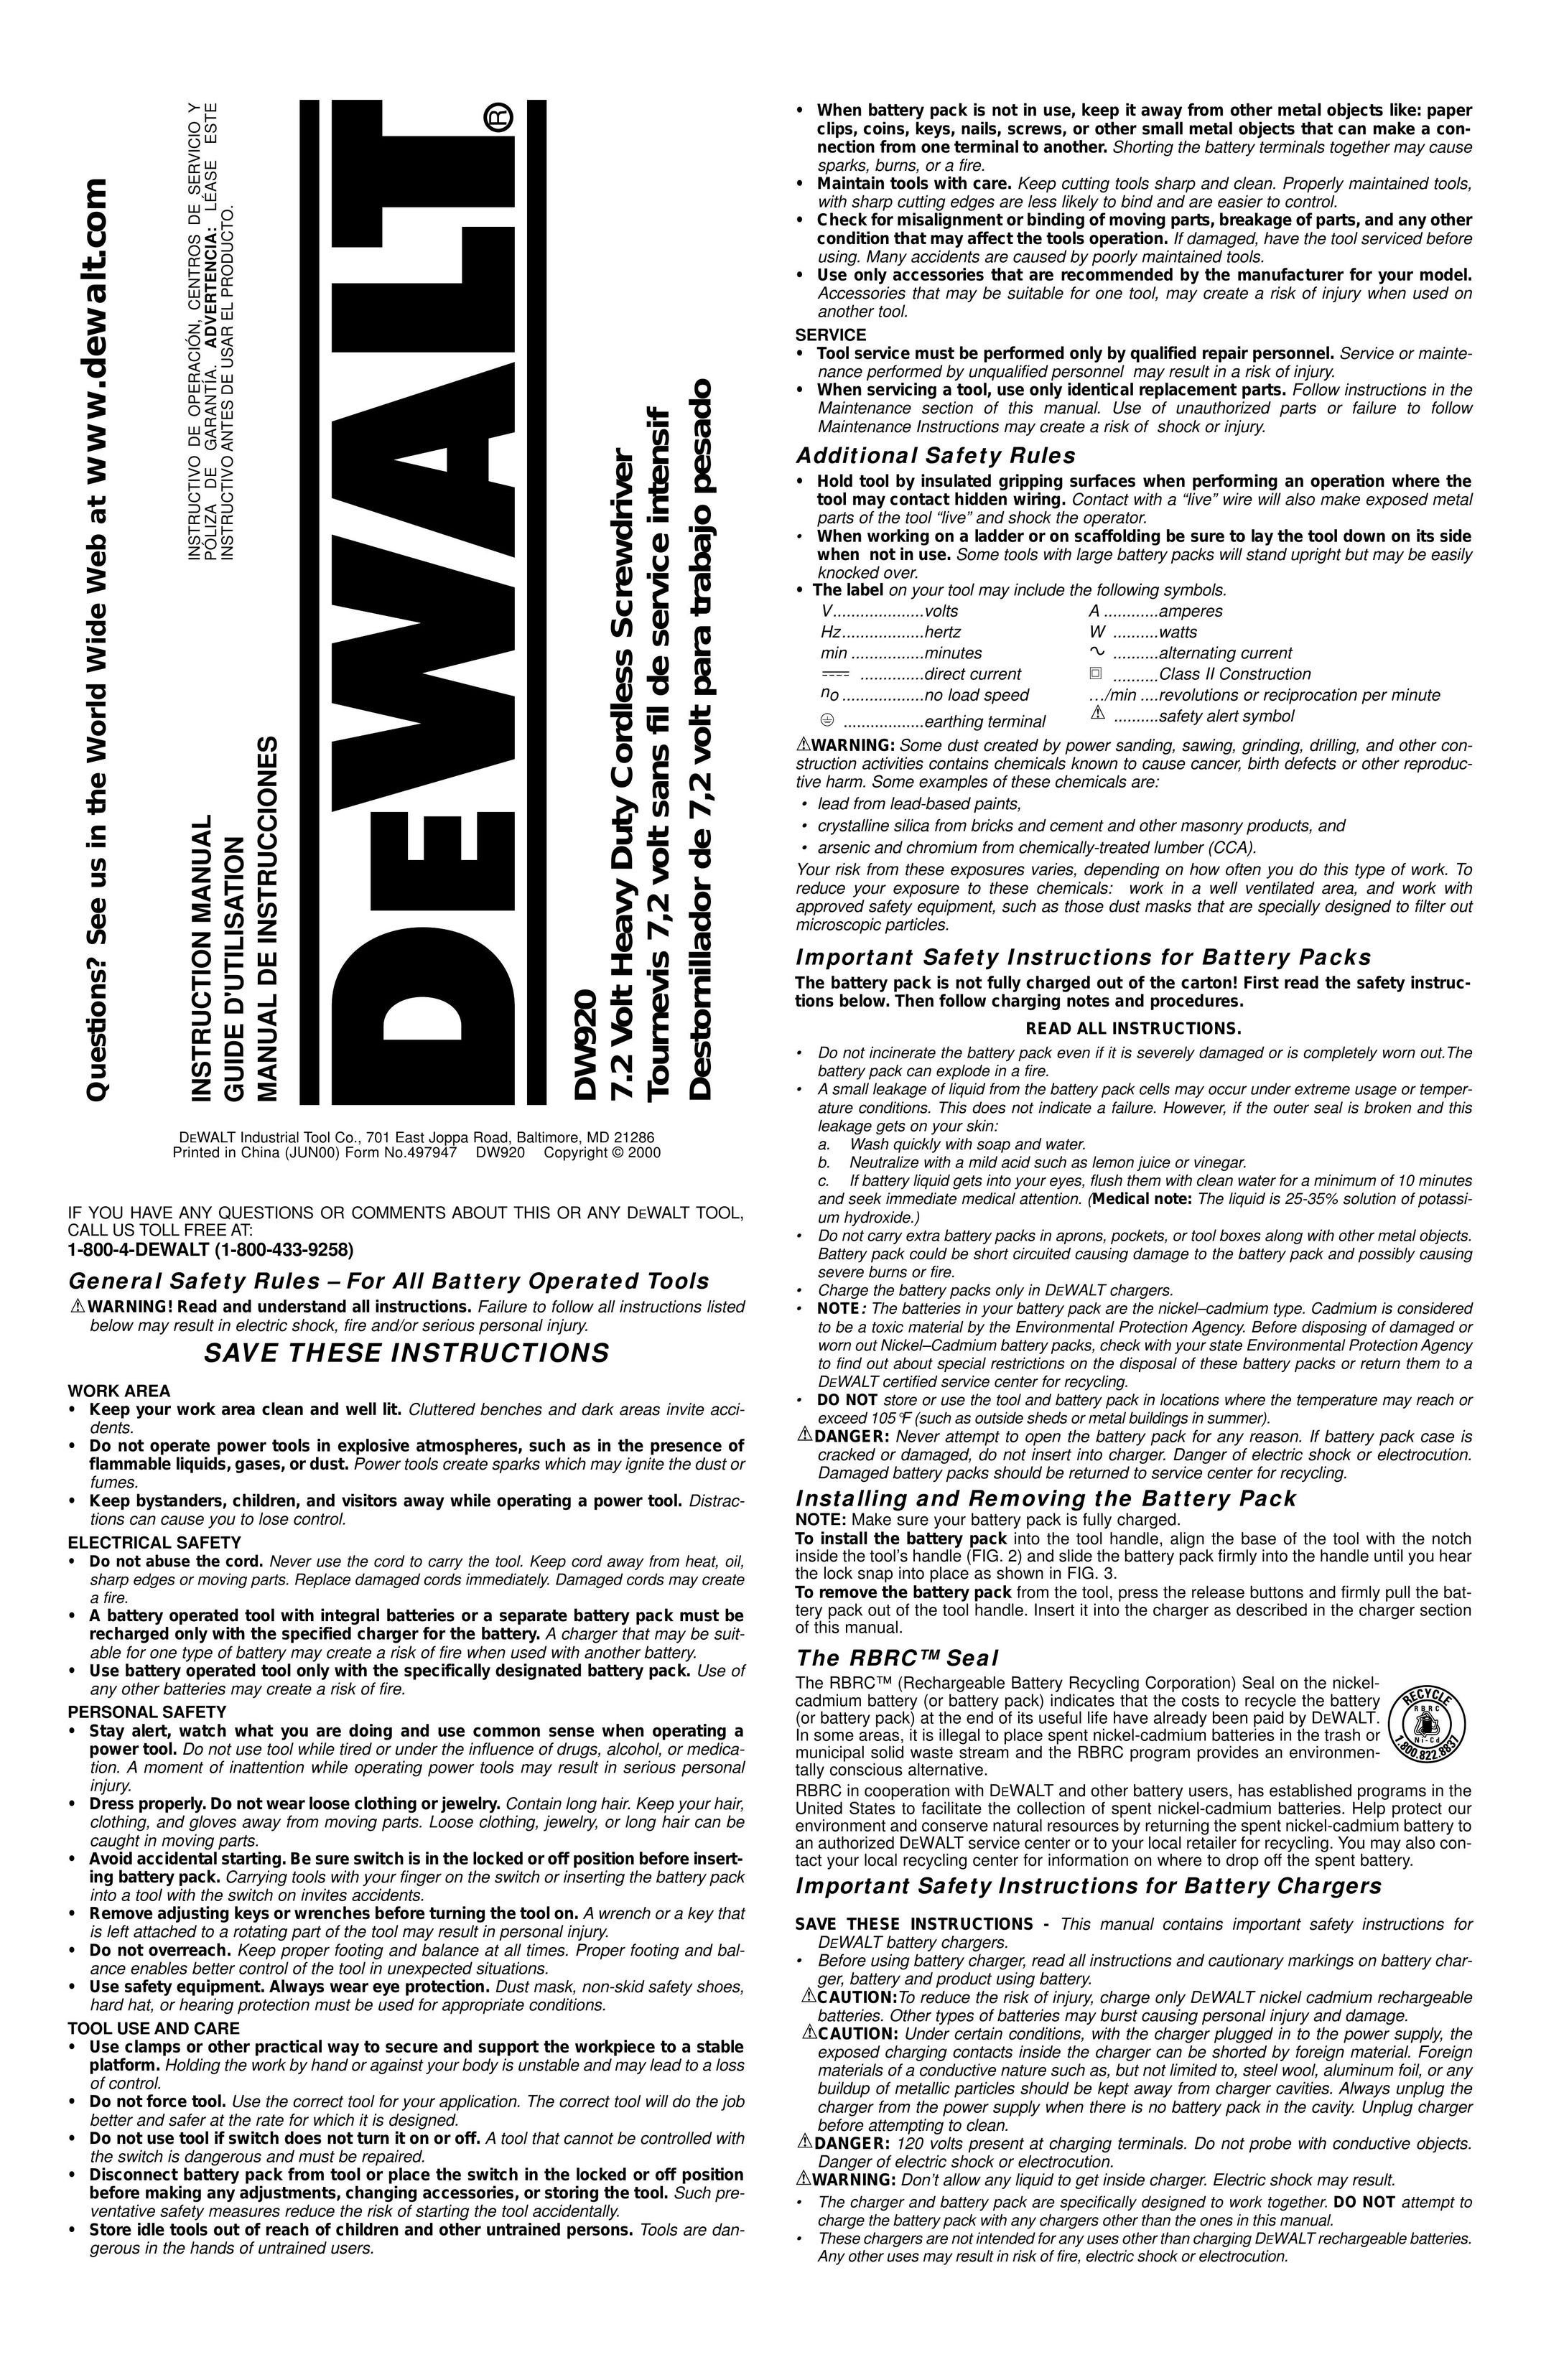 DeWalt DW920K-2 Power Screwdriver User Manual